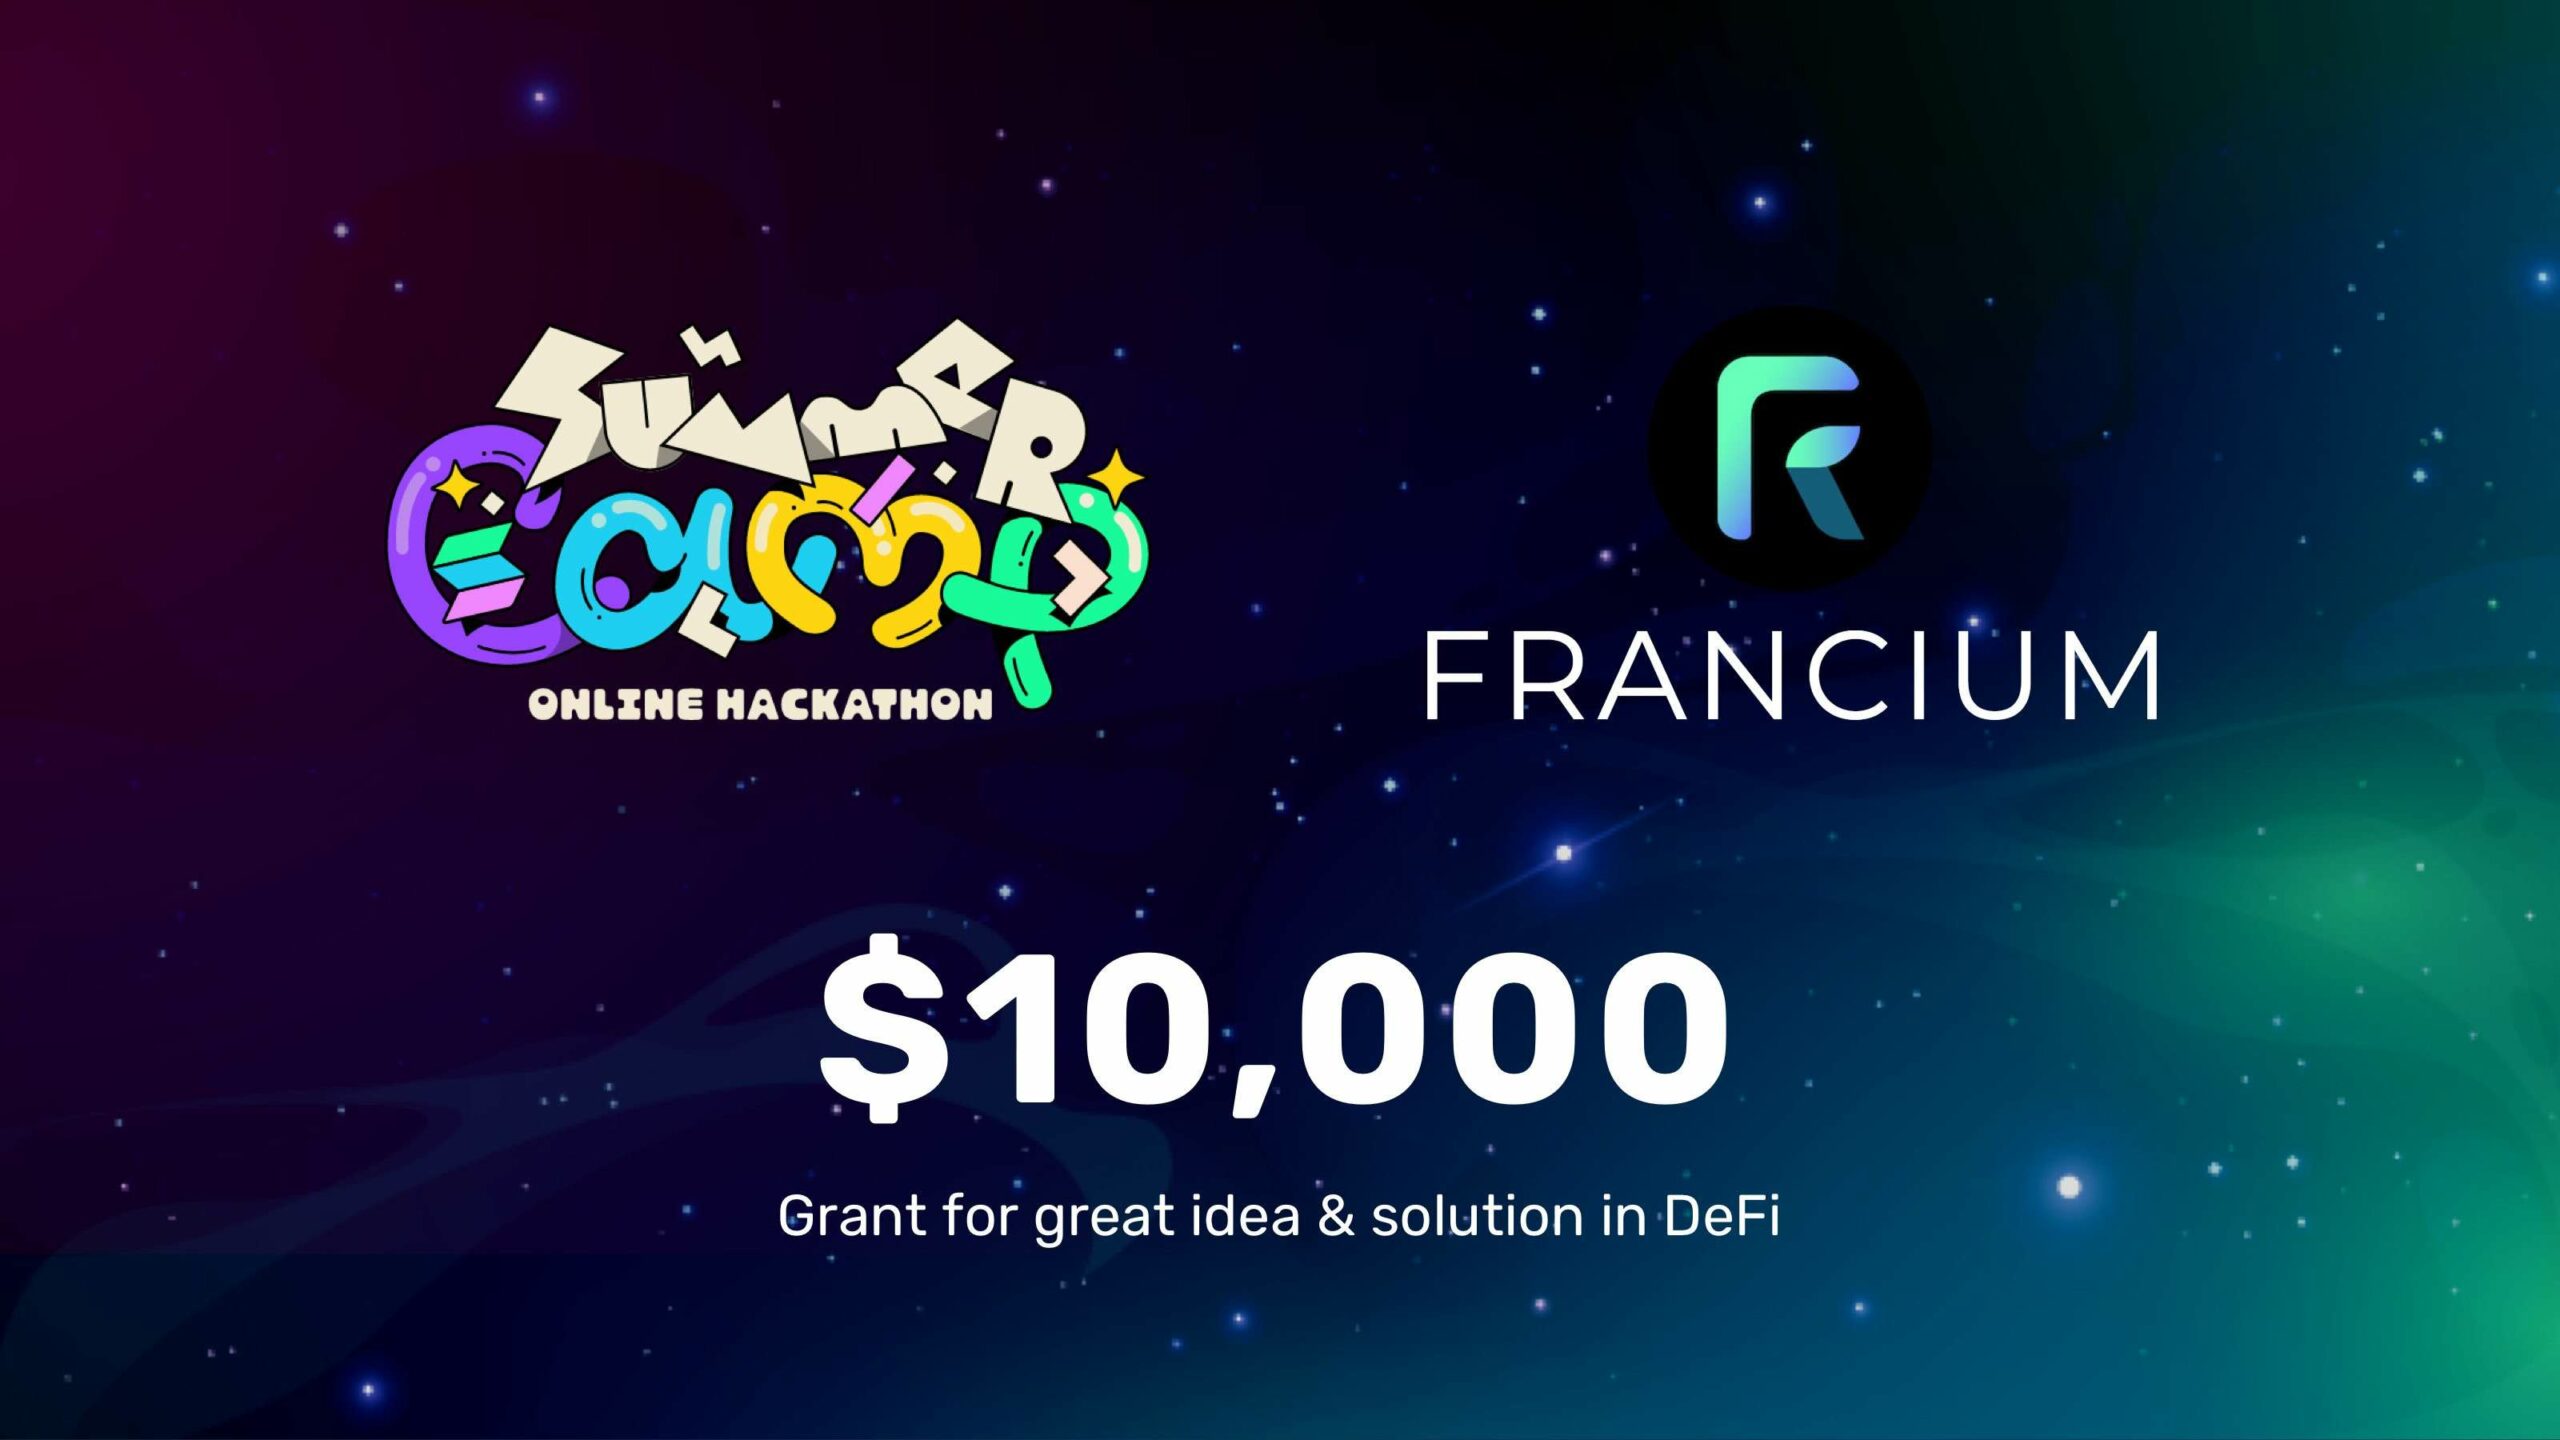 Francium cung cấp khoản tài trợ $10.000